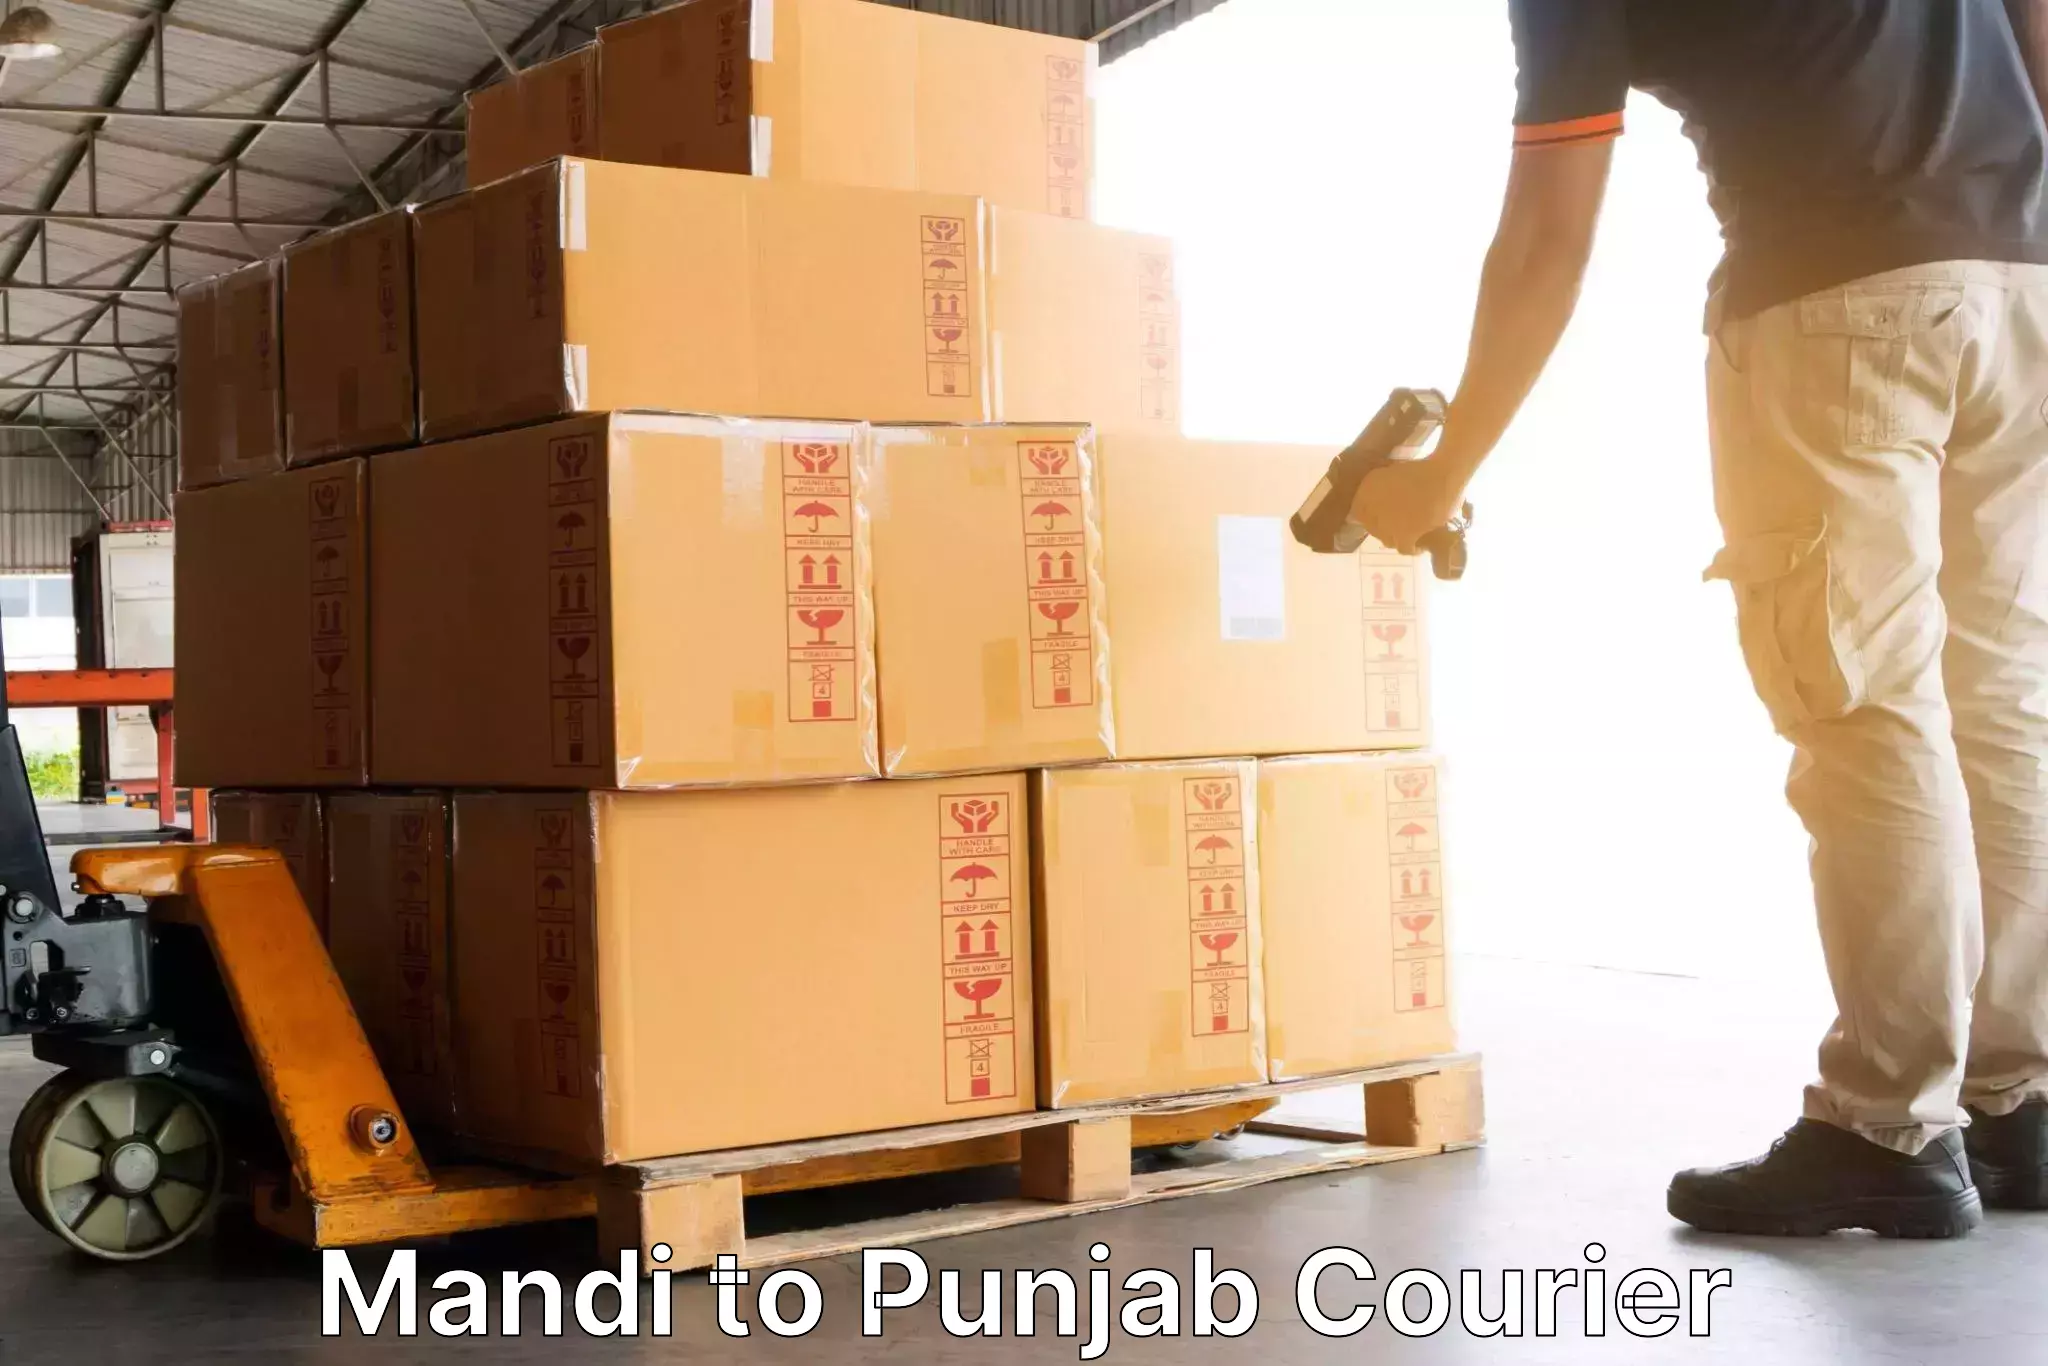 Express delivery capabilities Mandi to Samana